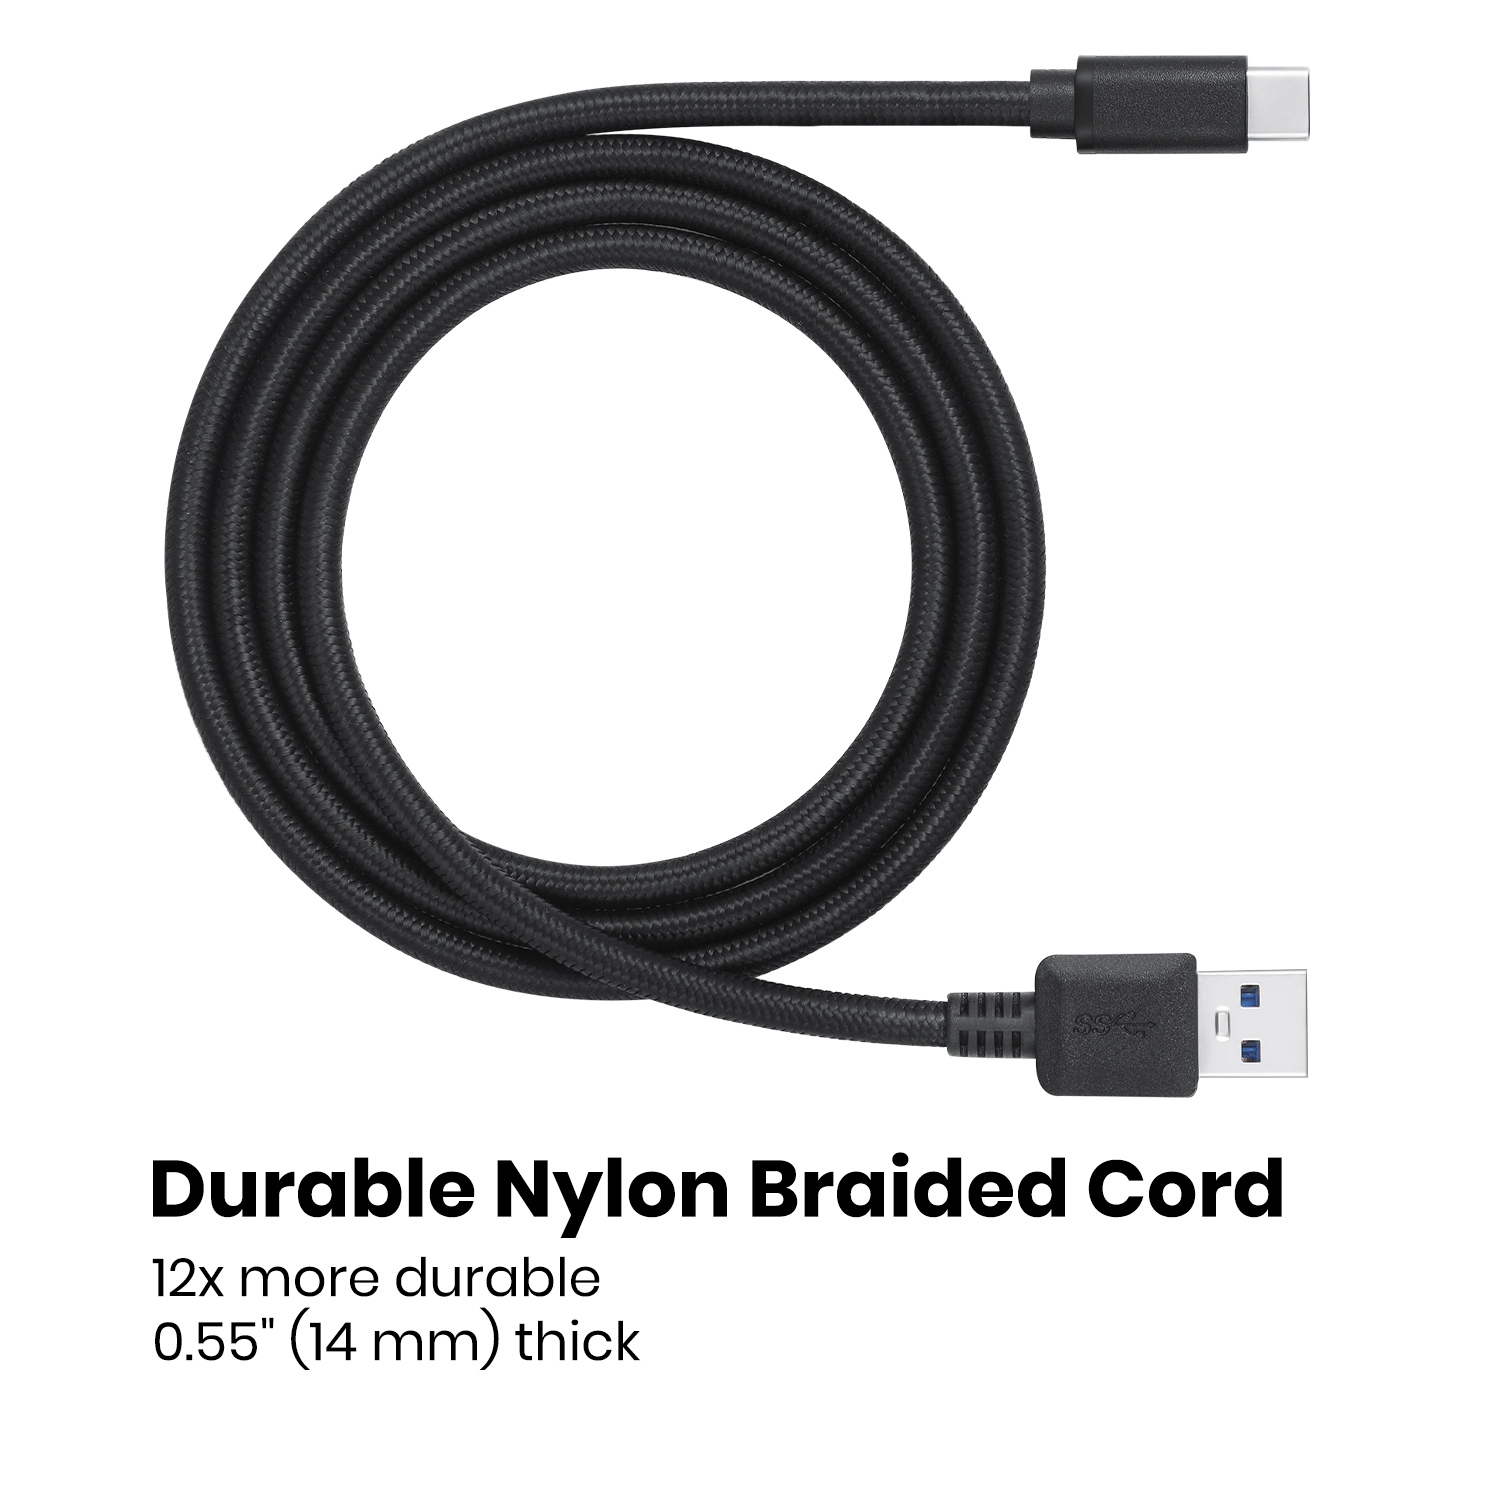 Durable Nylon Braided Cord